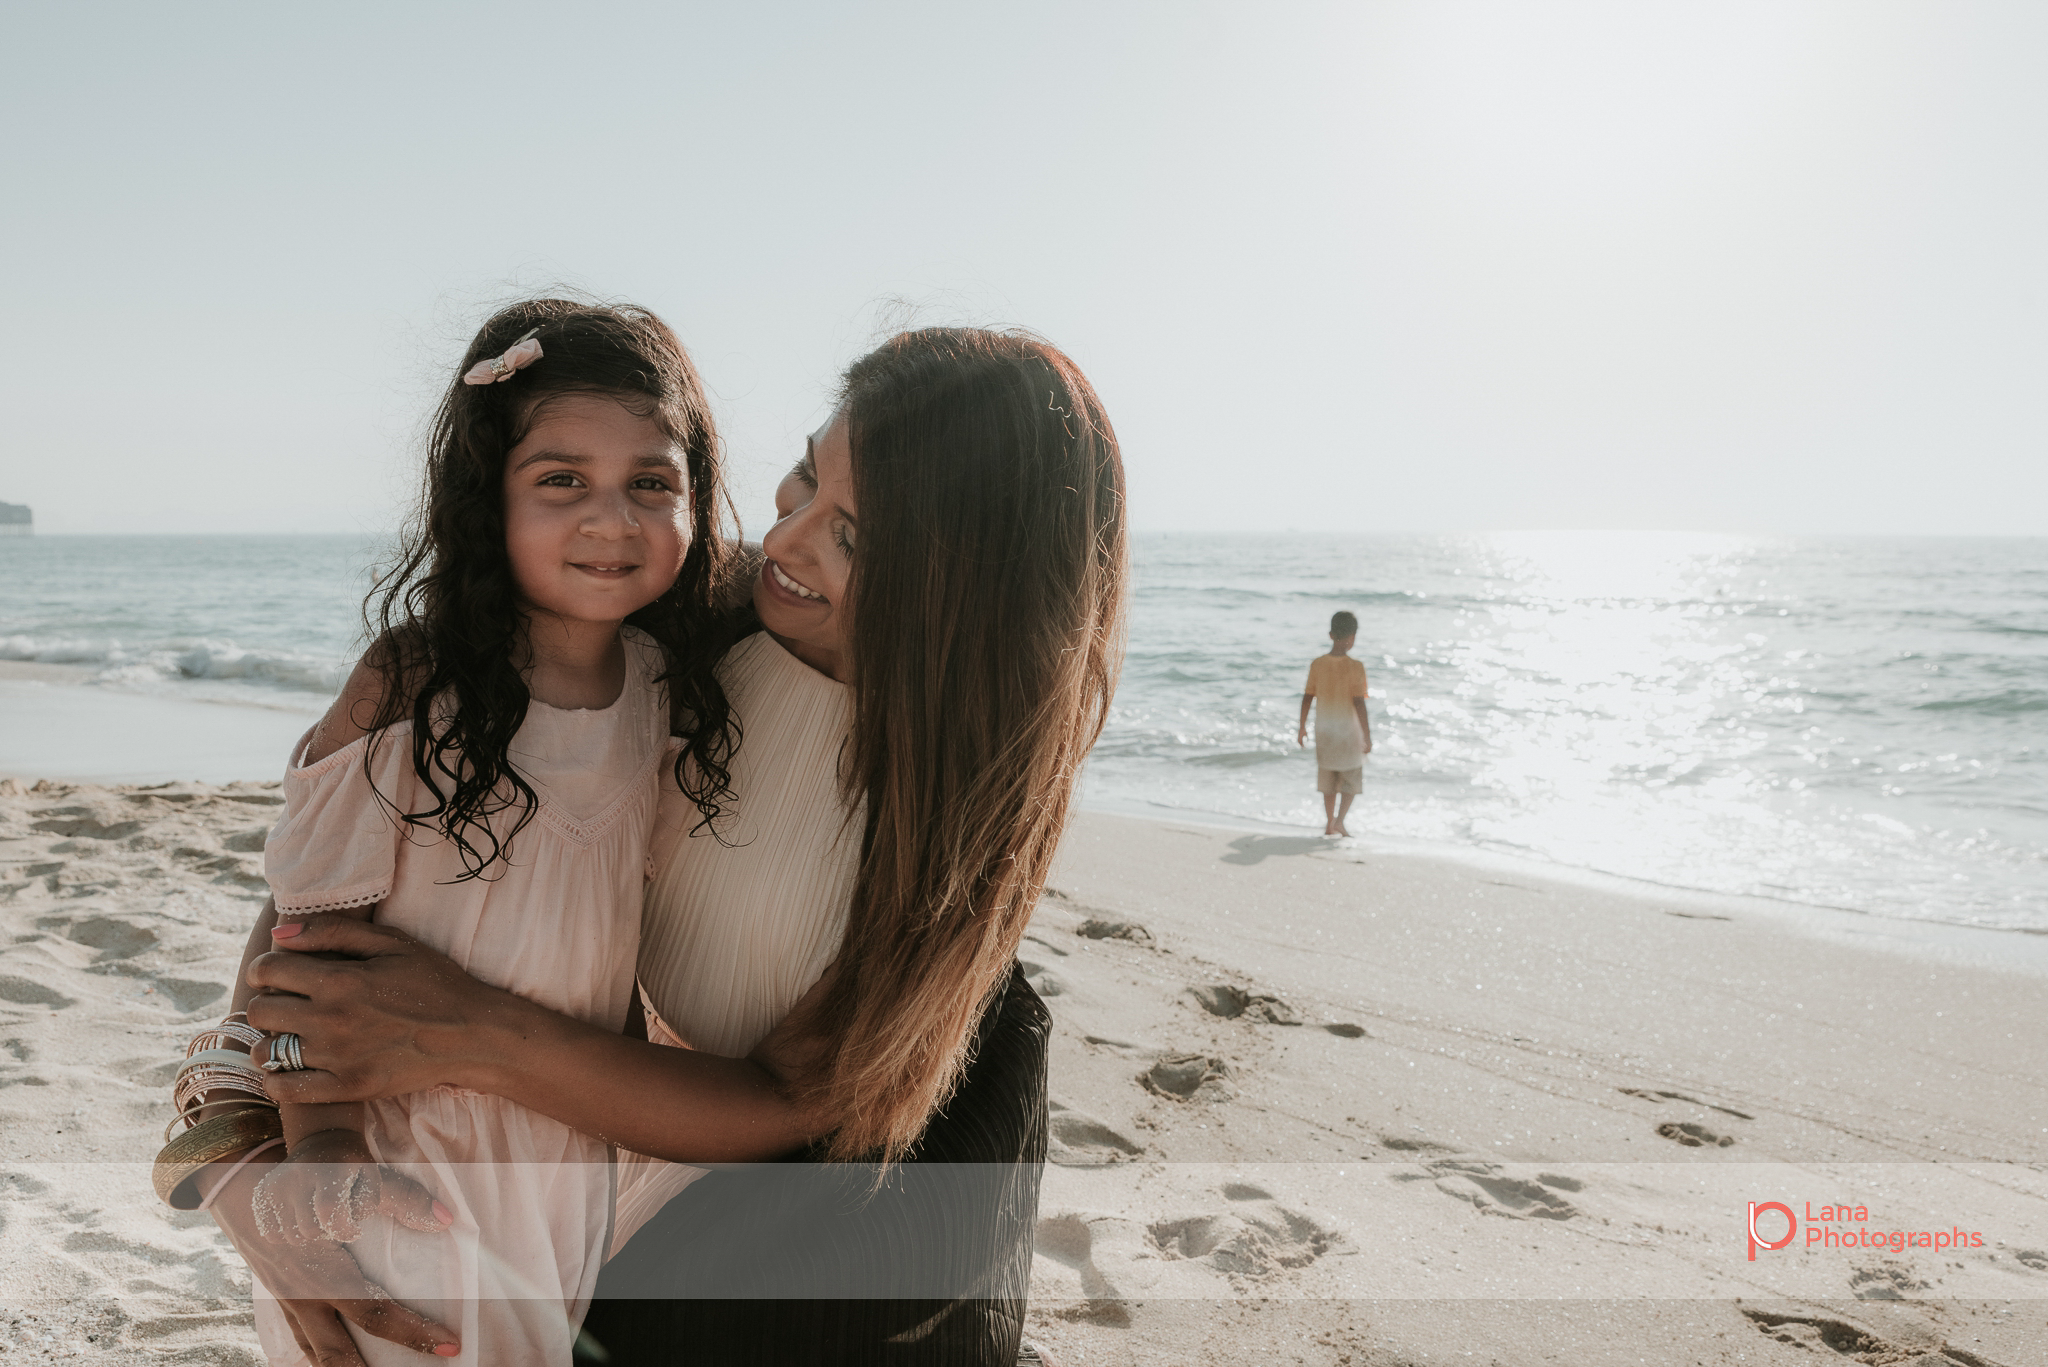  Lana Photographs Dubai Family Photography beach photoshoot mother and daughter moment 